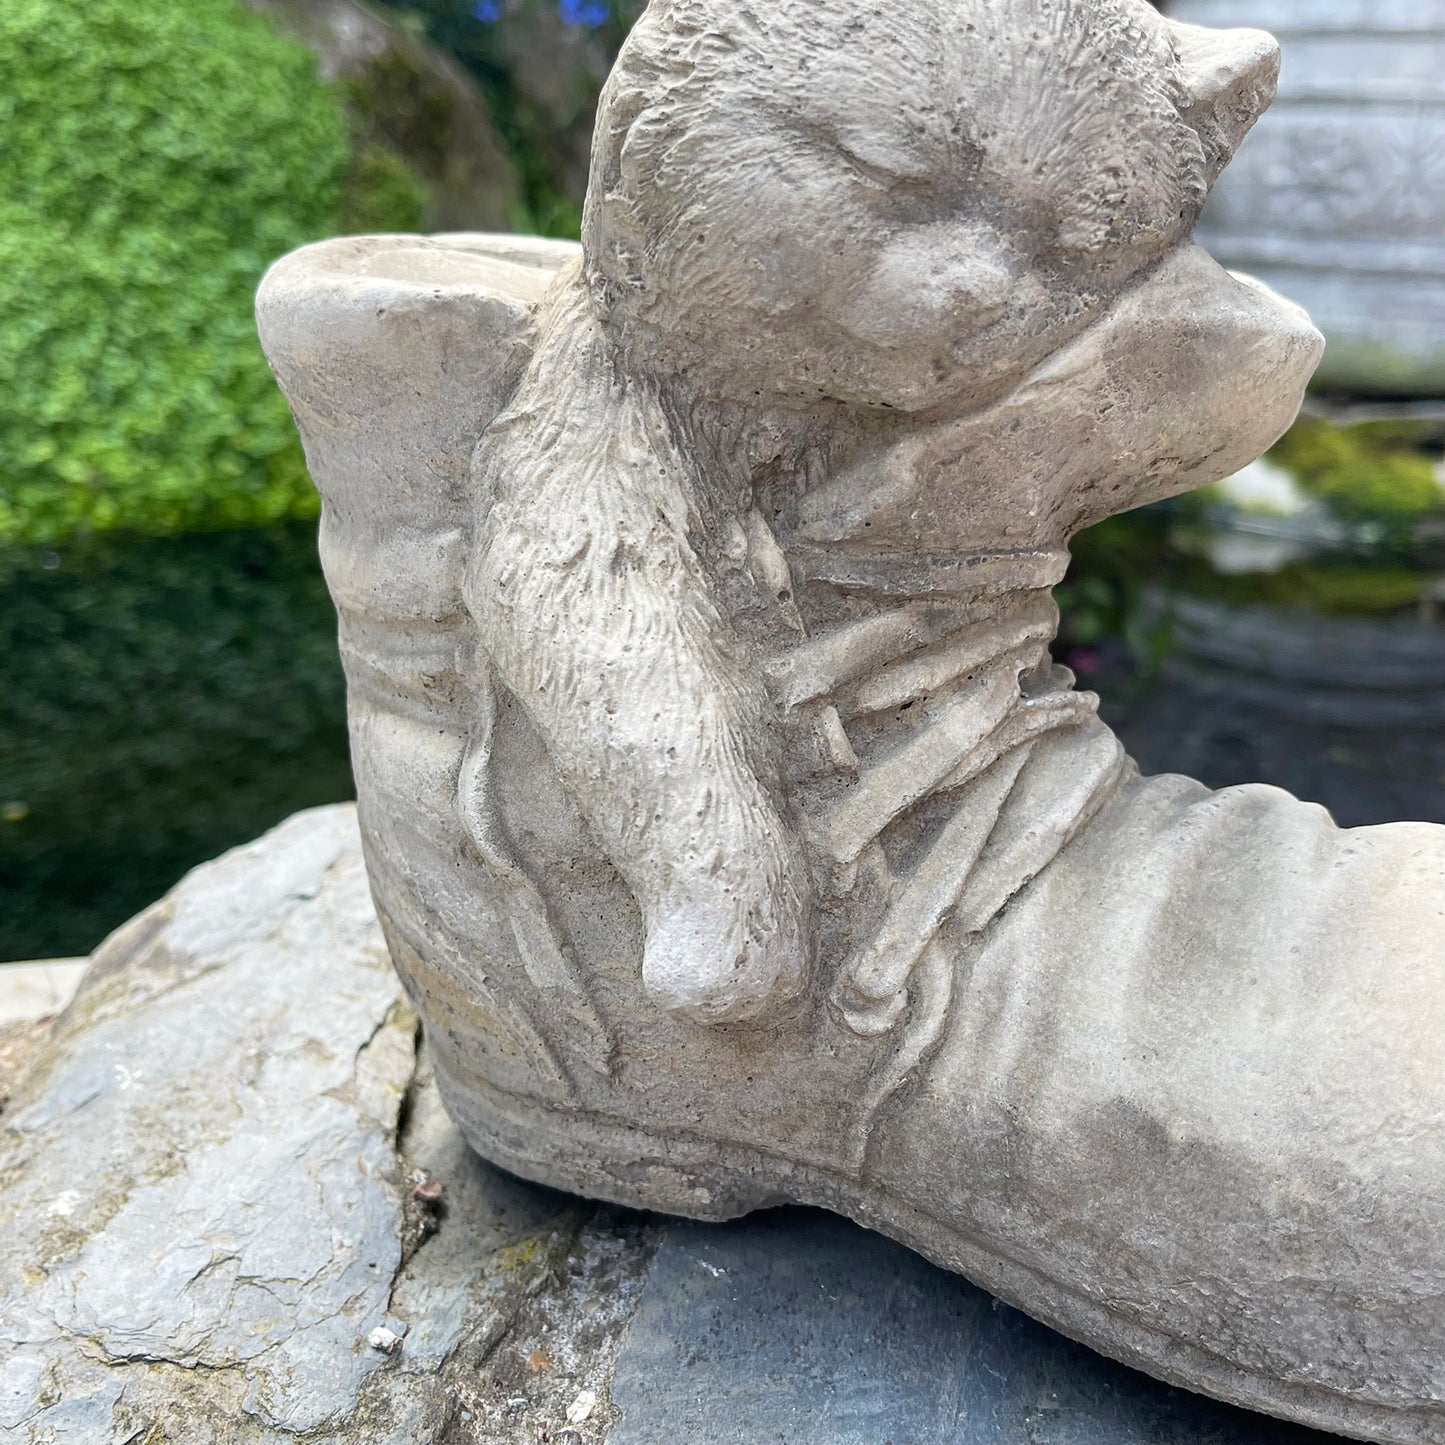 Stone Cat In Boot Garden Ornament